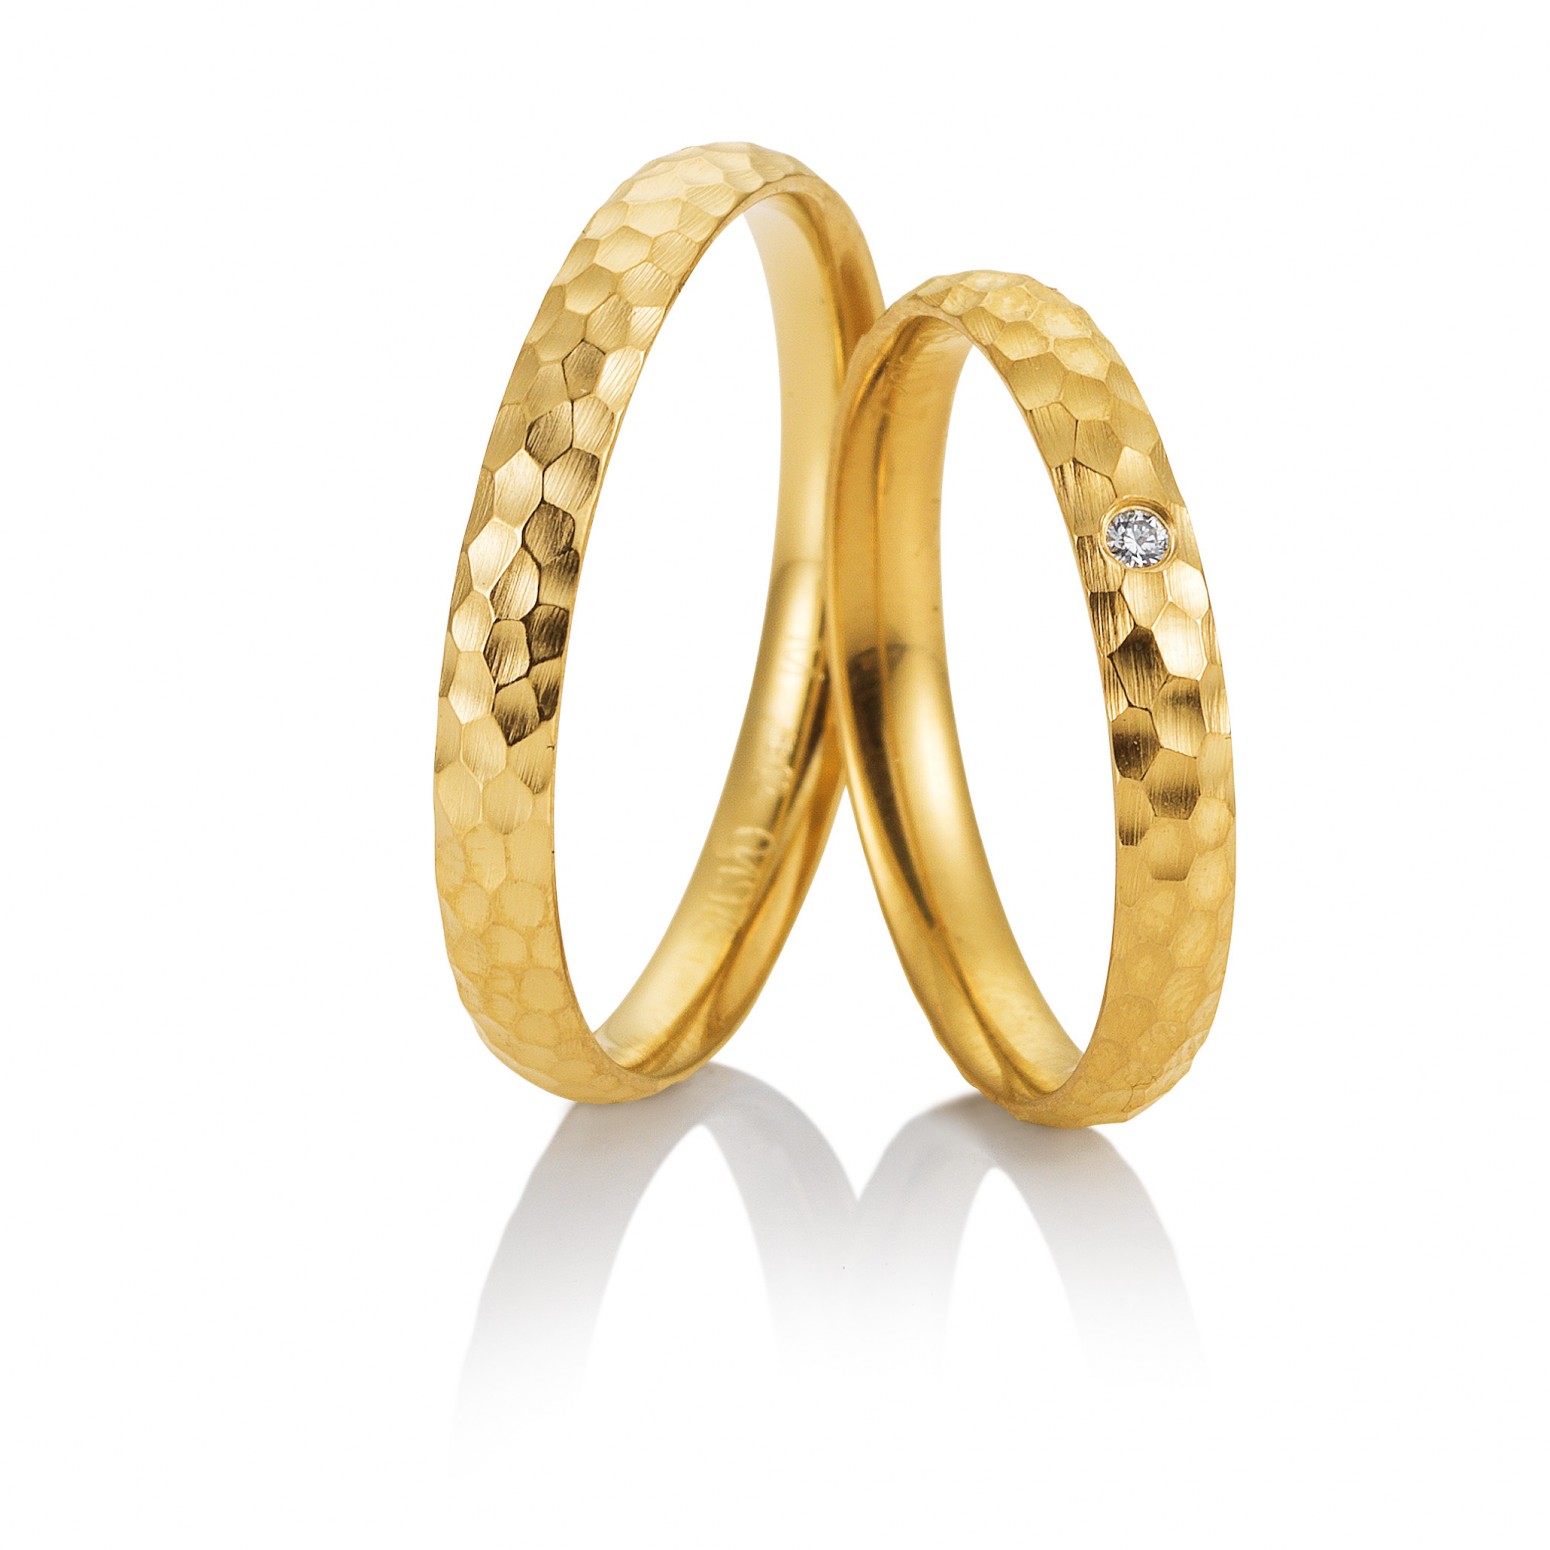 Bέρες γάμου Saint Maurice σε κίτρινο χρυσό, K9, ζευγάρι da3594 ΒΕΡΕΣ Κοσμηματα - chrilia.gr